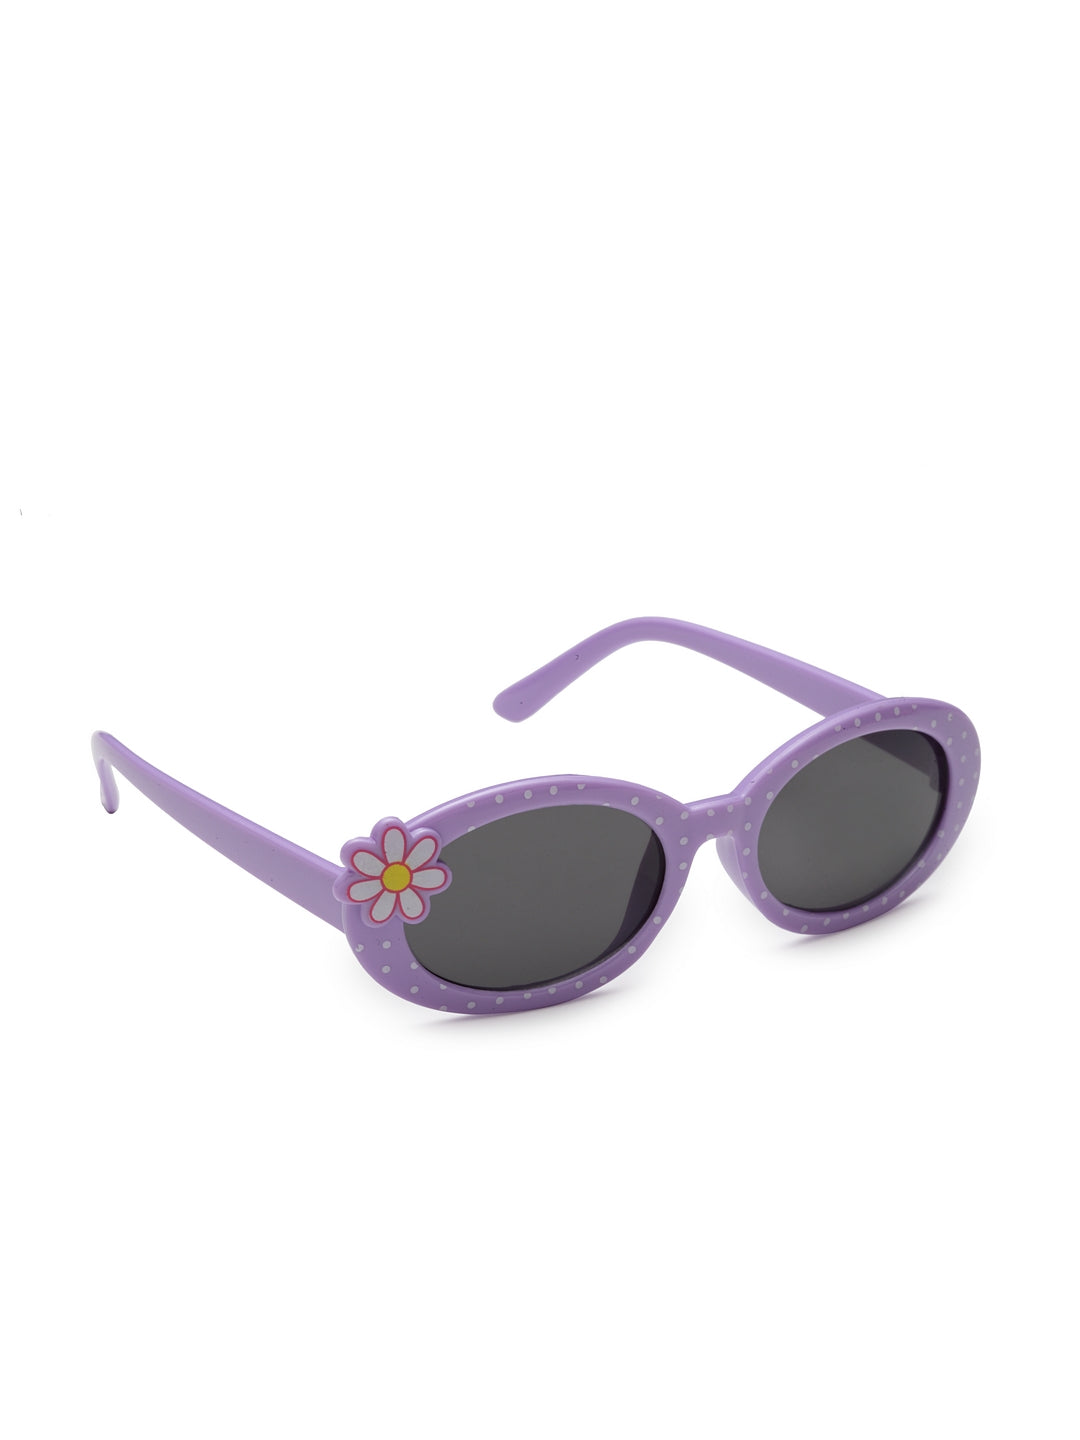 Stol'n Premium Attractive Fashionable UV-Protected Oval Shape Sunglasses - Purple